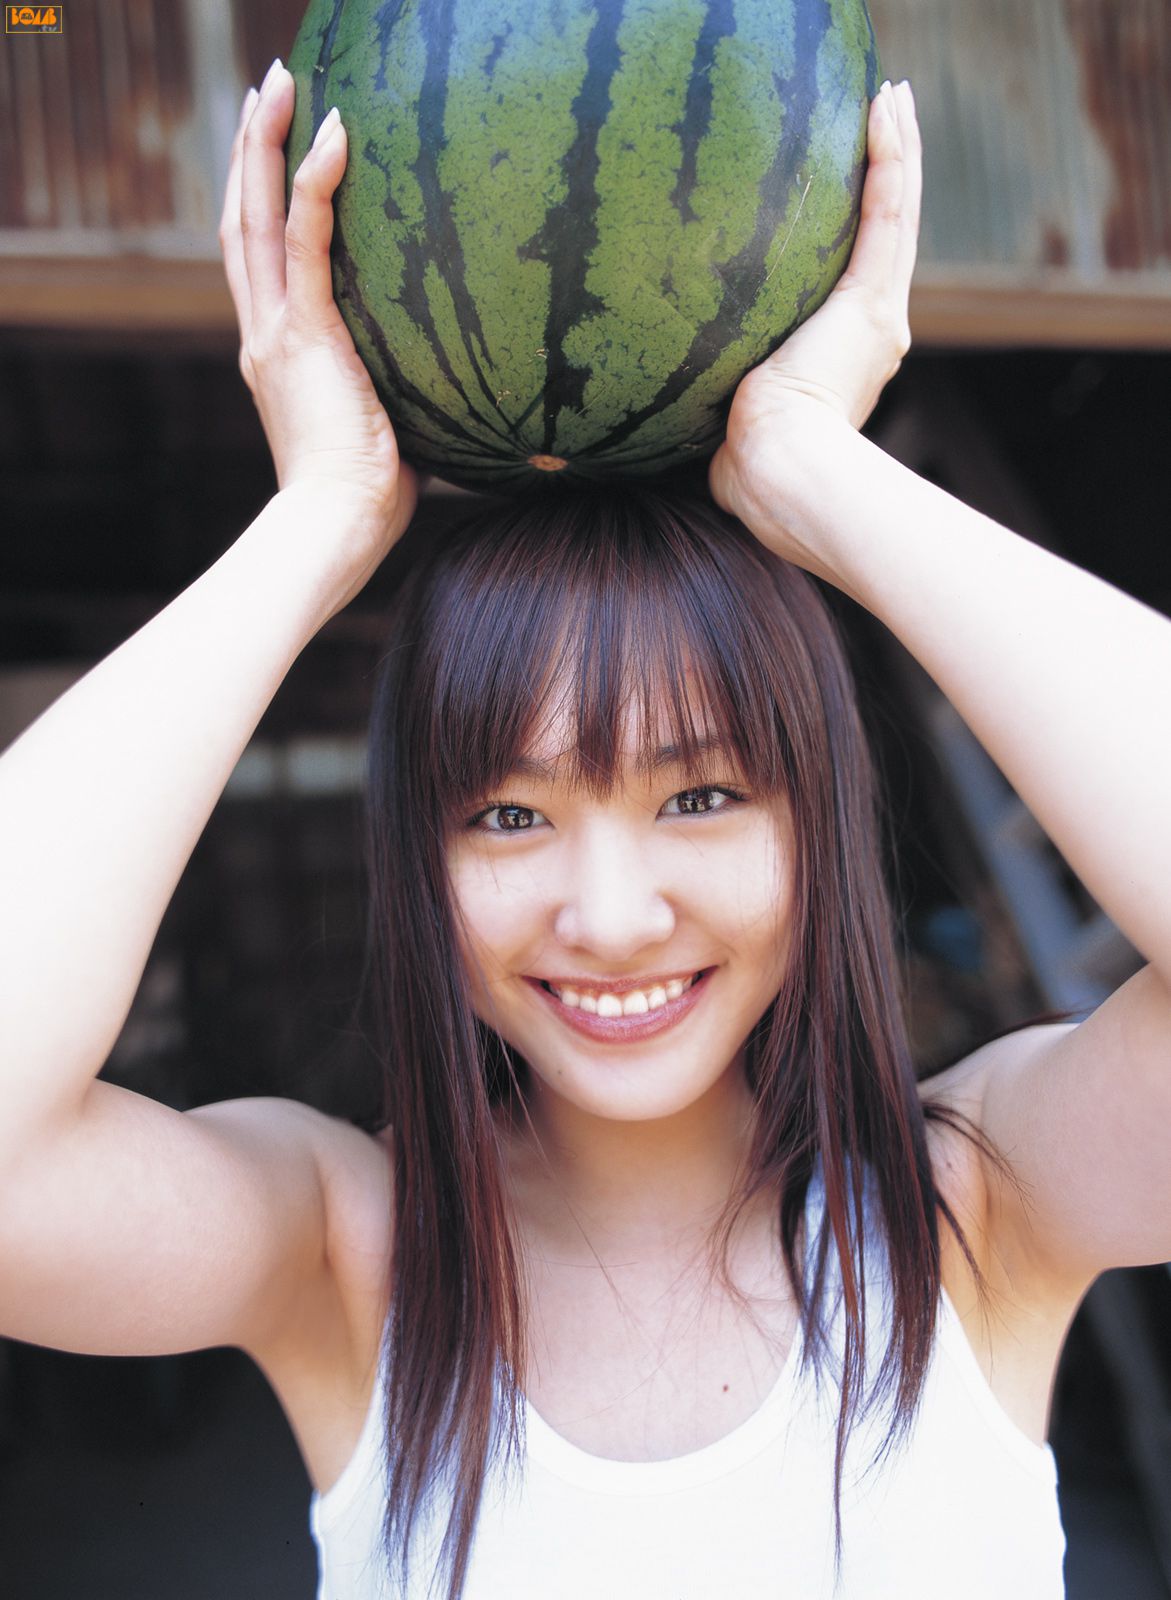 People 1171x1600 Asian women Japanese women Yui Aragaki watermelons food fruit smiling actress model long hair brunette women outdoors looking at viewer